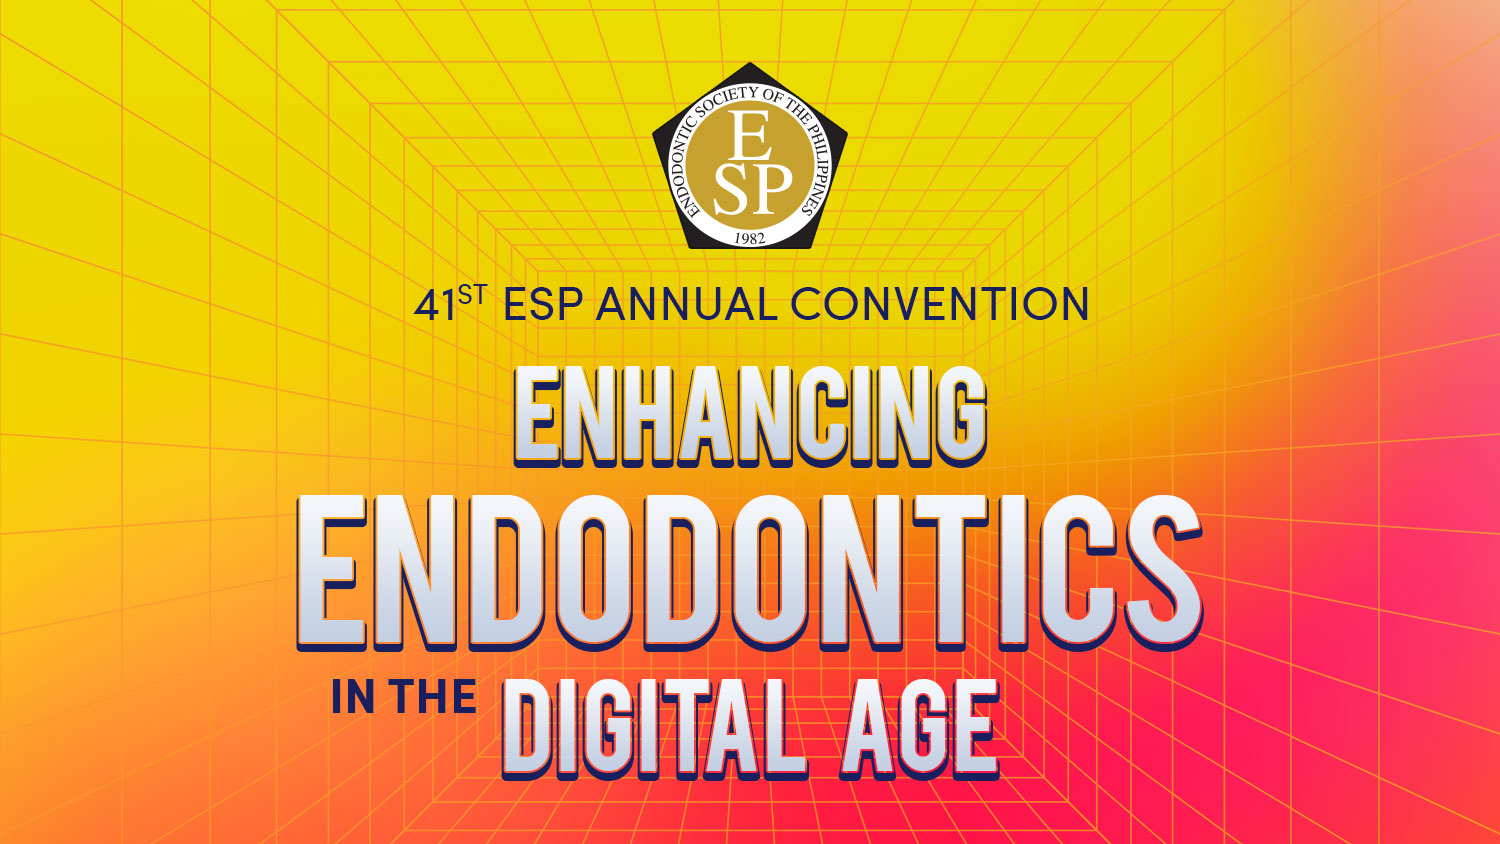 Enhancing Endodontics in the Digital Age | 41st ESP Annual Convention